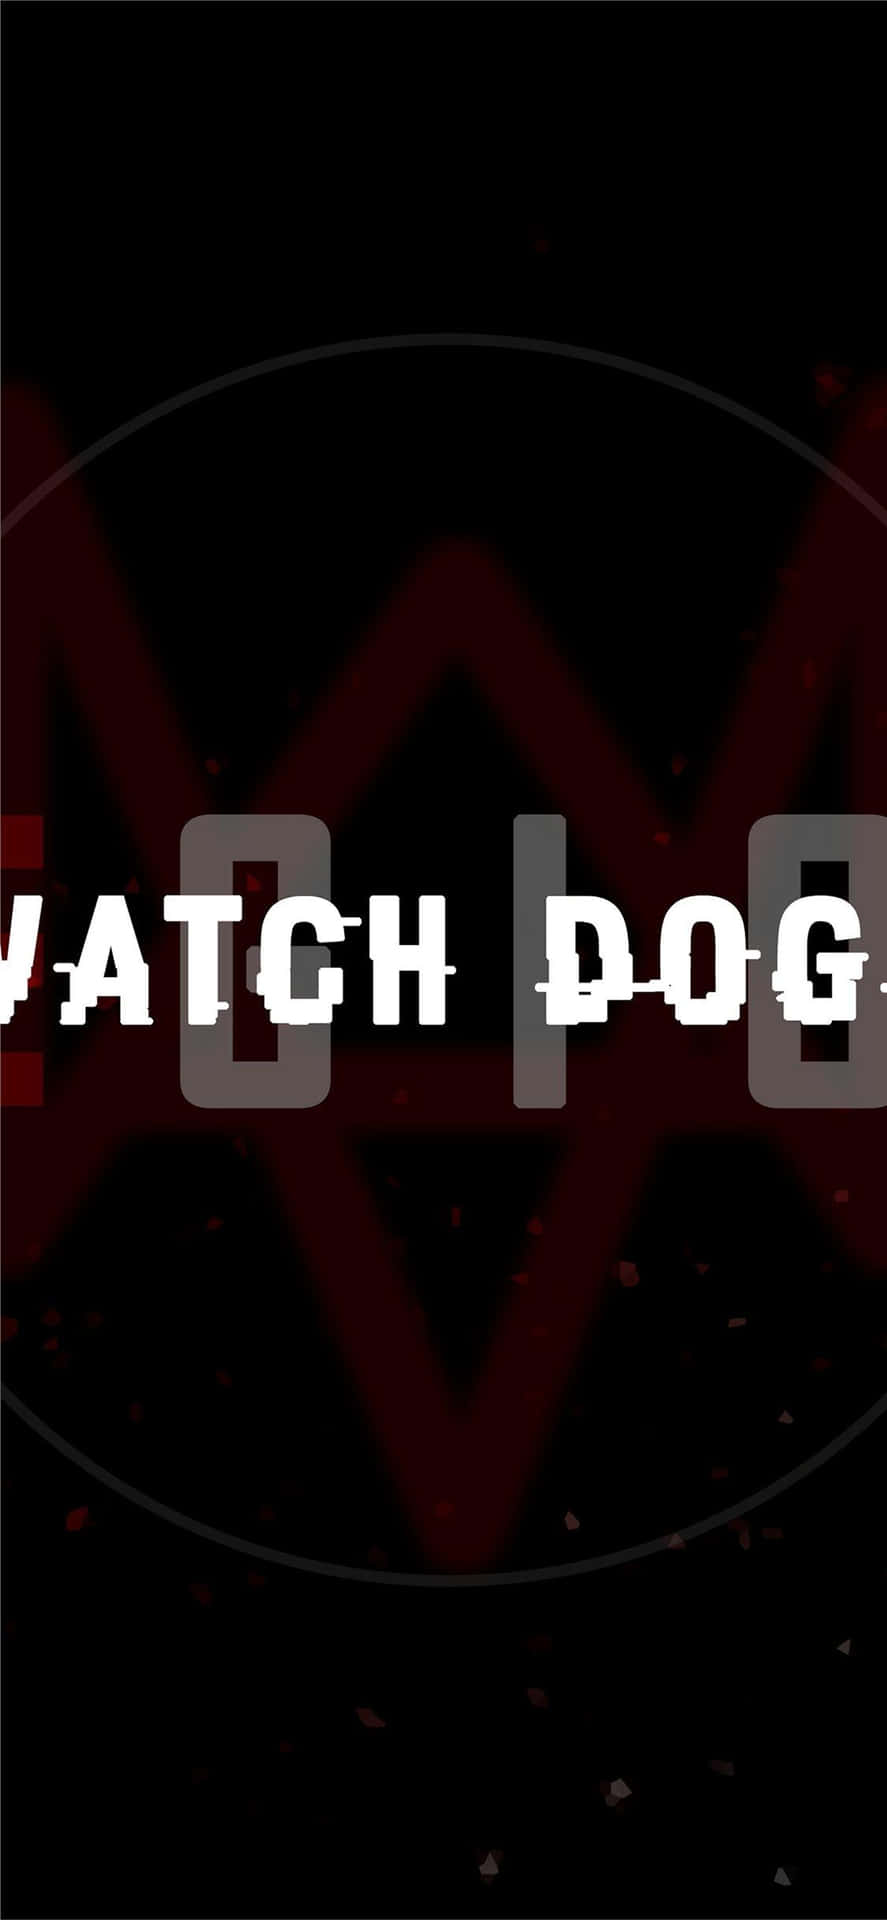 Watch Dogs Iphone Minimalist Wallpaper